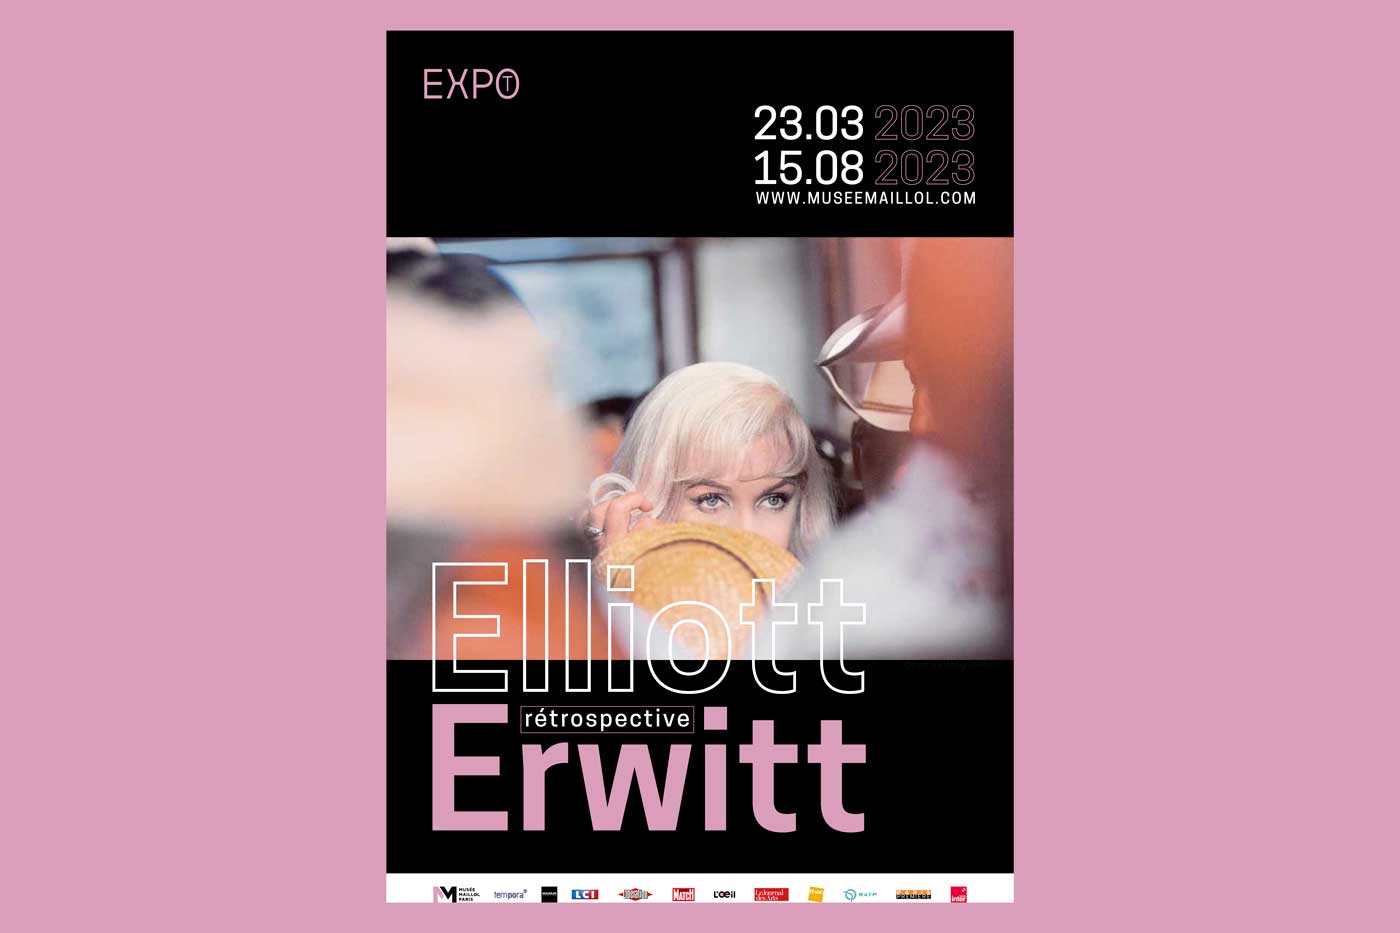 Expo Elliott Erwitt Musée Maillol